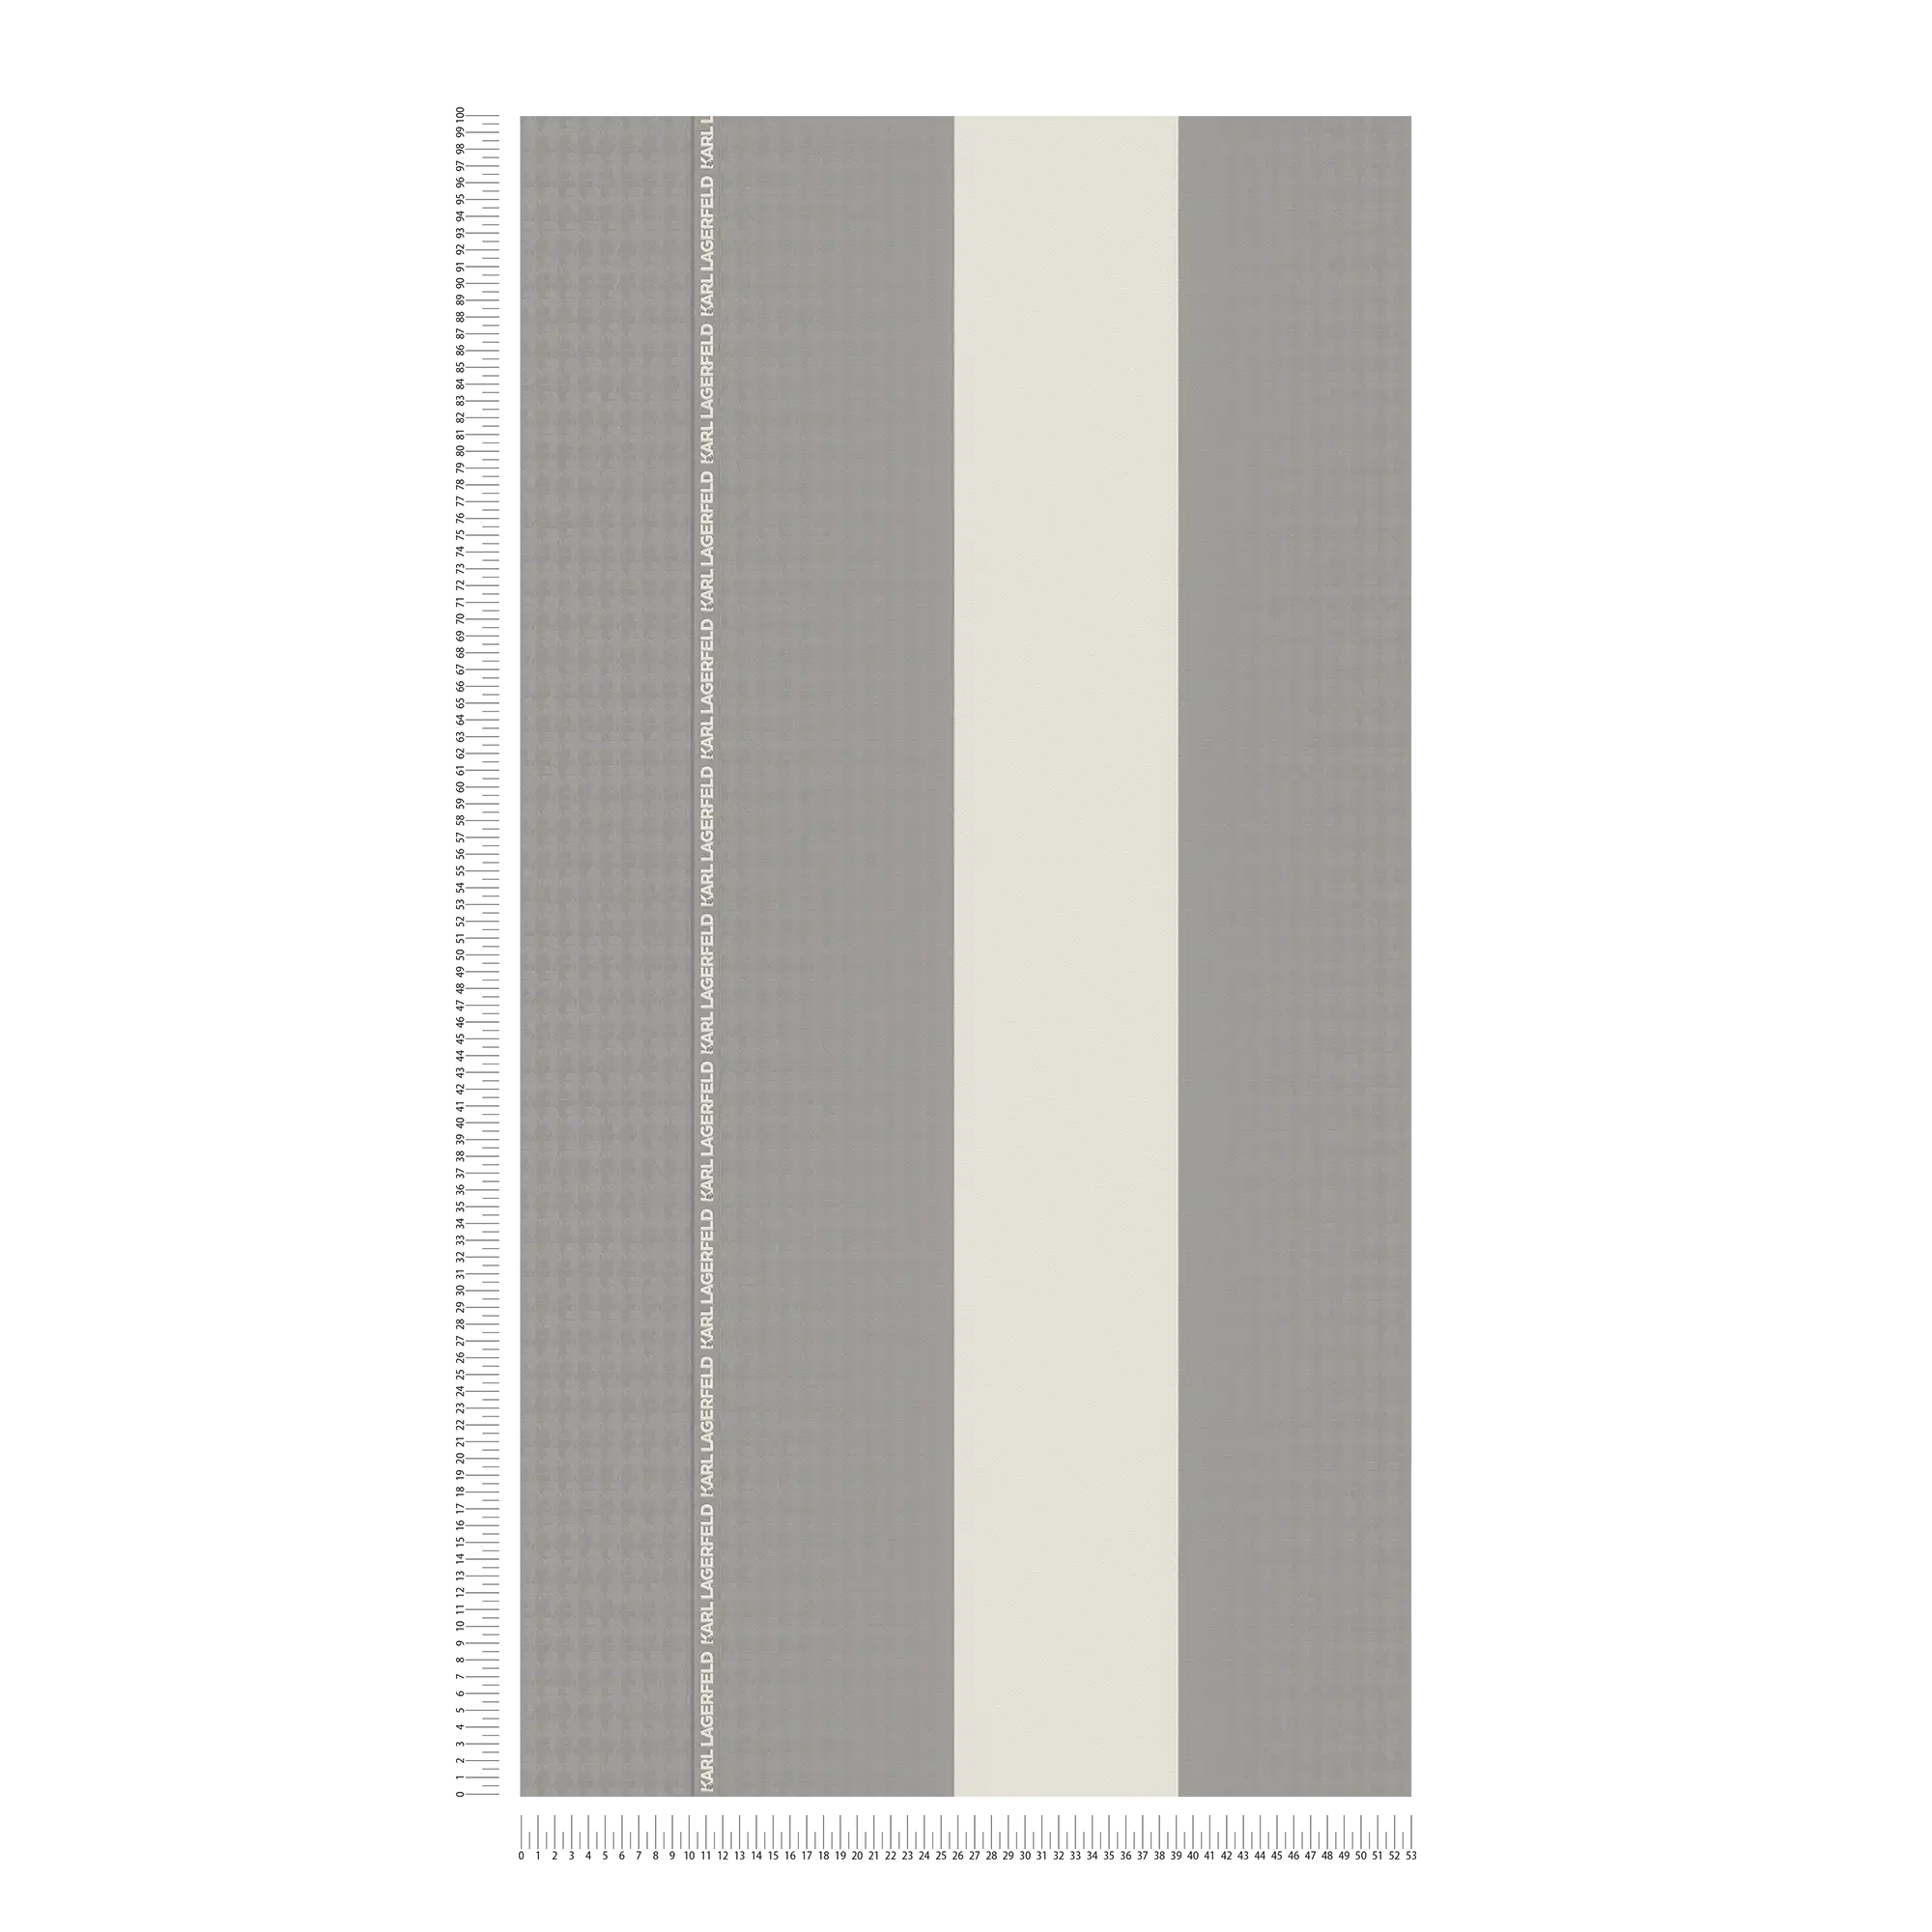             Papel pintado no tejido Karl LAGERFELD a rayas con efecto de textura - gris, blanco
        